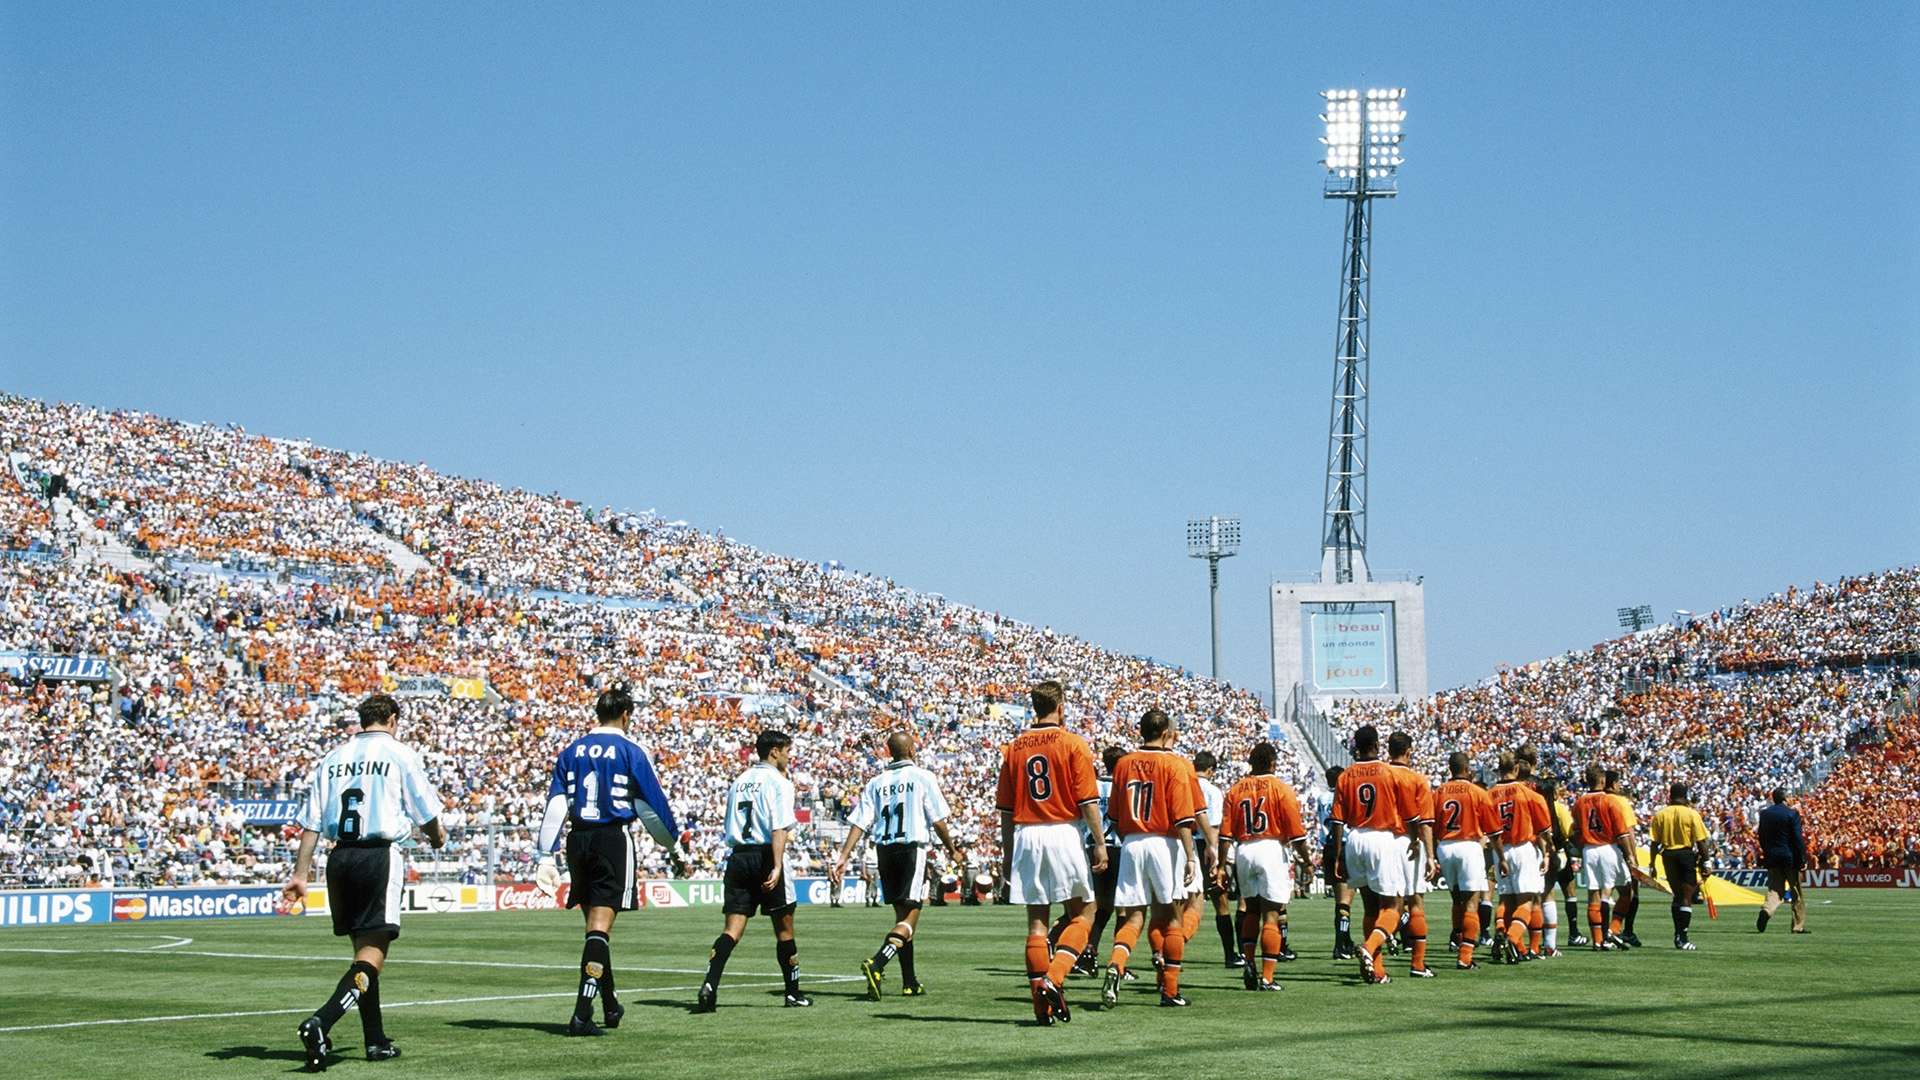 Argentina Netherlands World Cup 1998